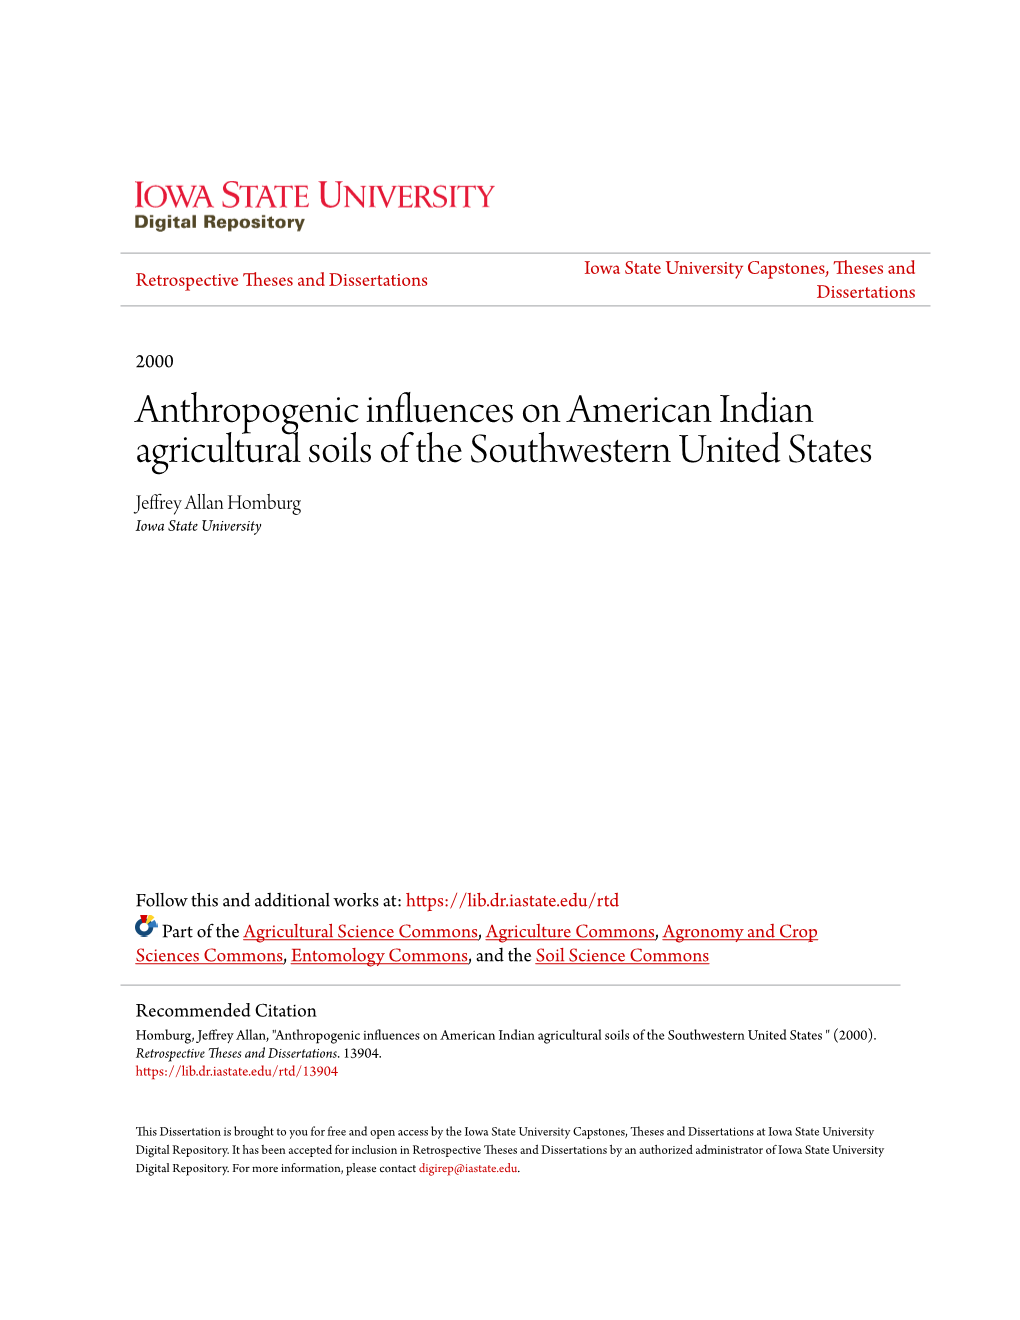 Anthropogenic Influences on American Indian Agricultural Soils of the Southwestern United States Jeffrey Allan Homburg Iowa State University